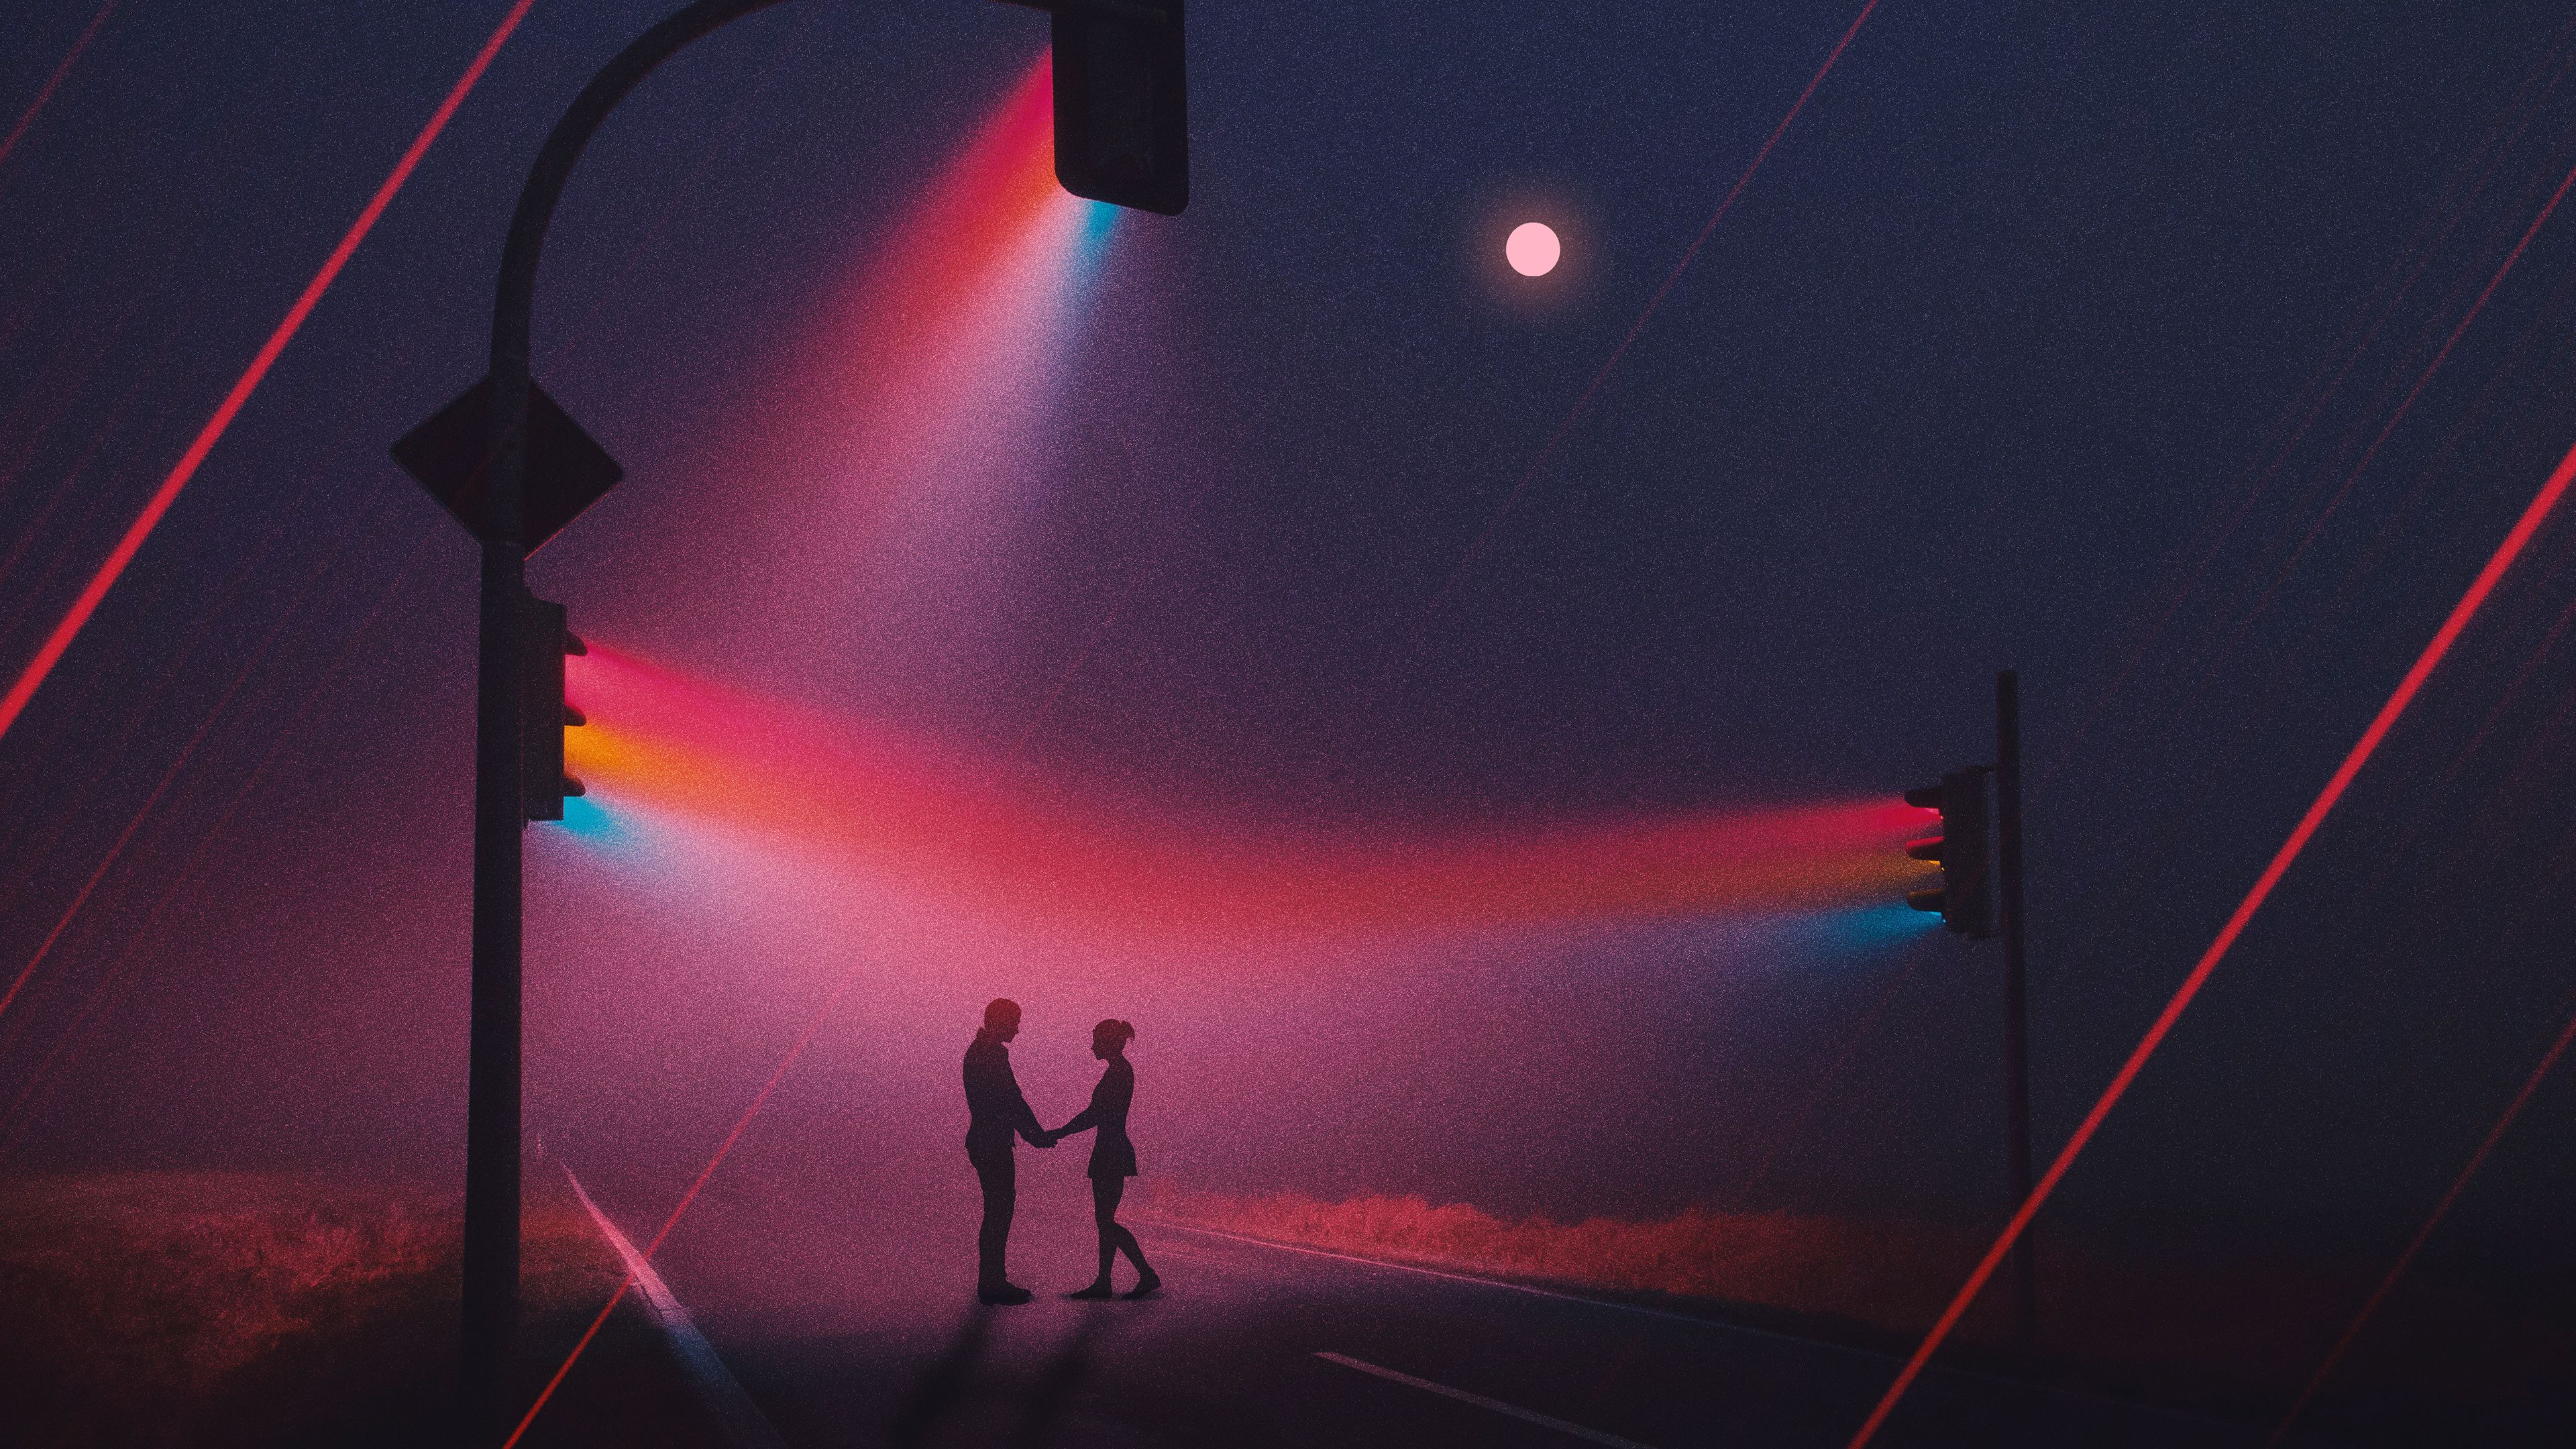 Couple 4K Wallpaper, Silhouette, Traffic lights, Night, Romantic, Focus, Spectrum, Moon, Road, Love